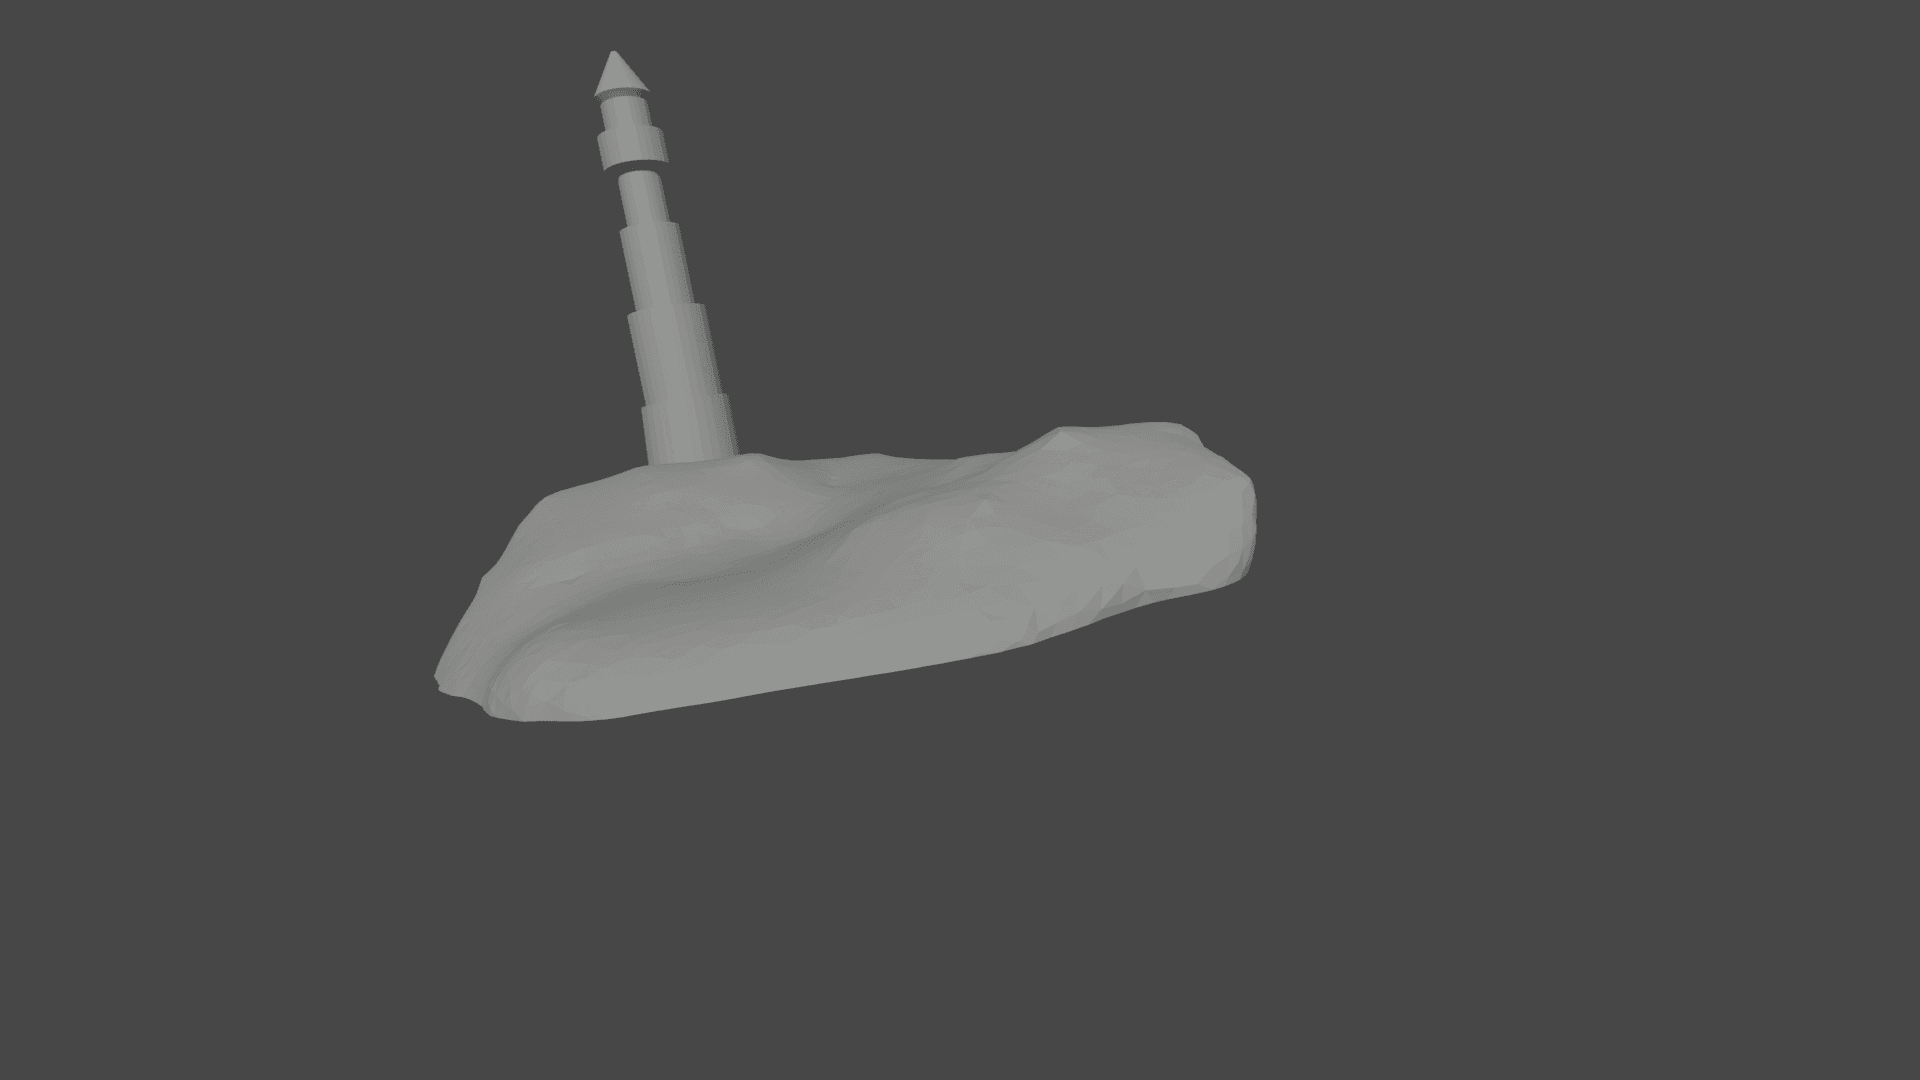 Filament Island - 3D model by AsSeenOn3d on Thangs